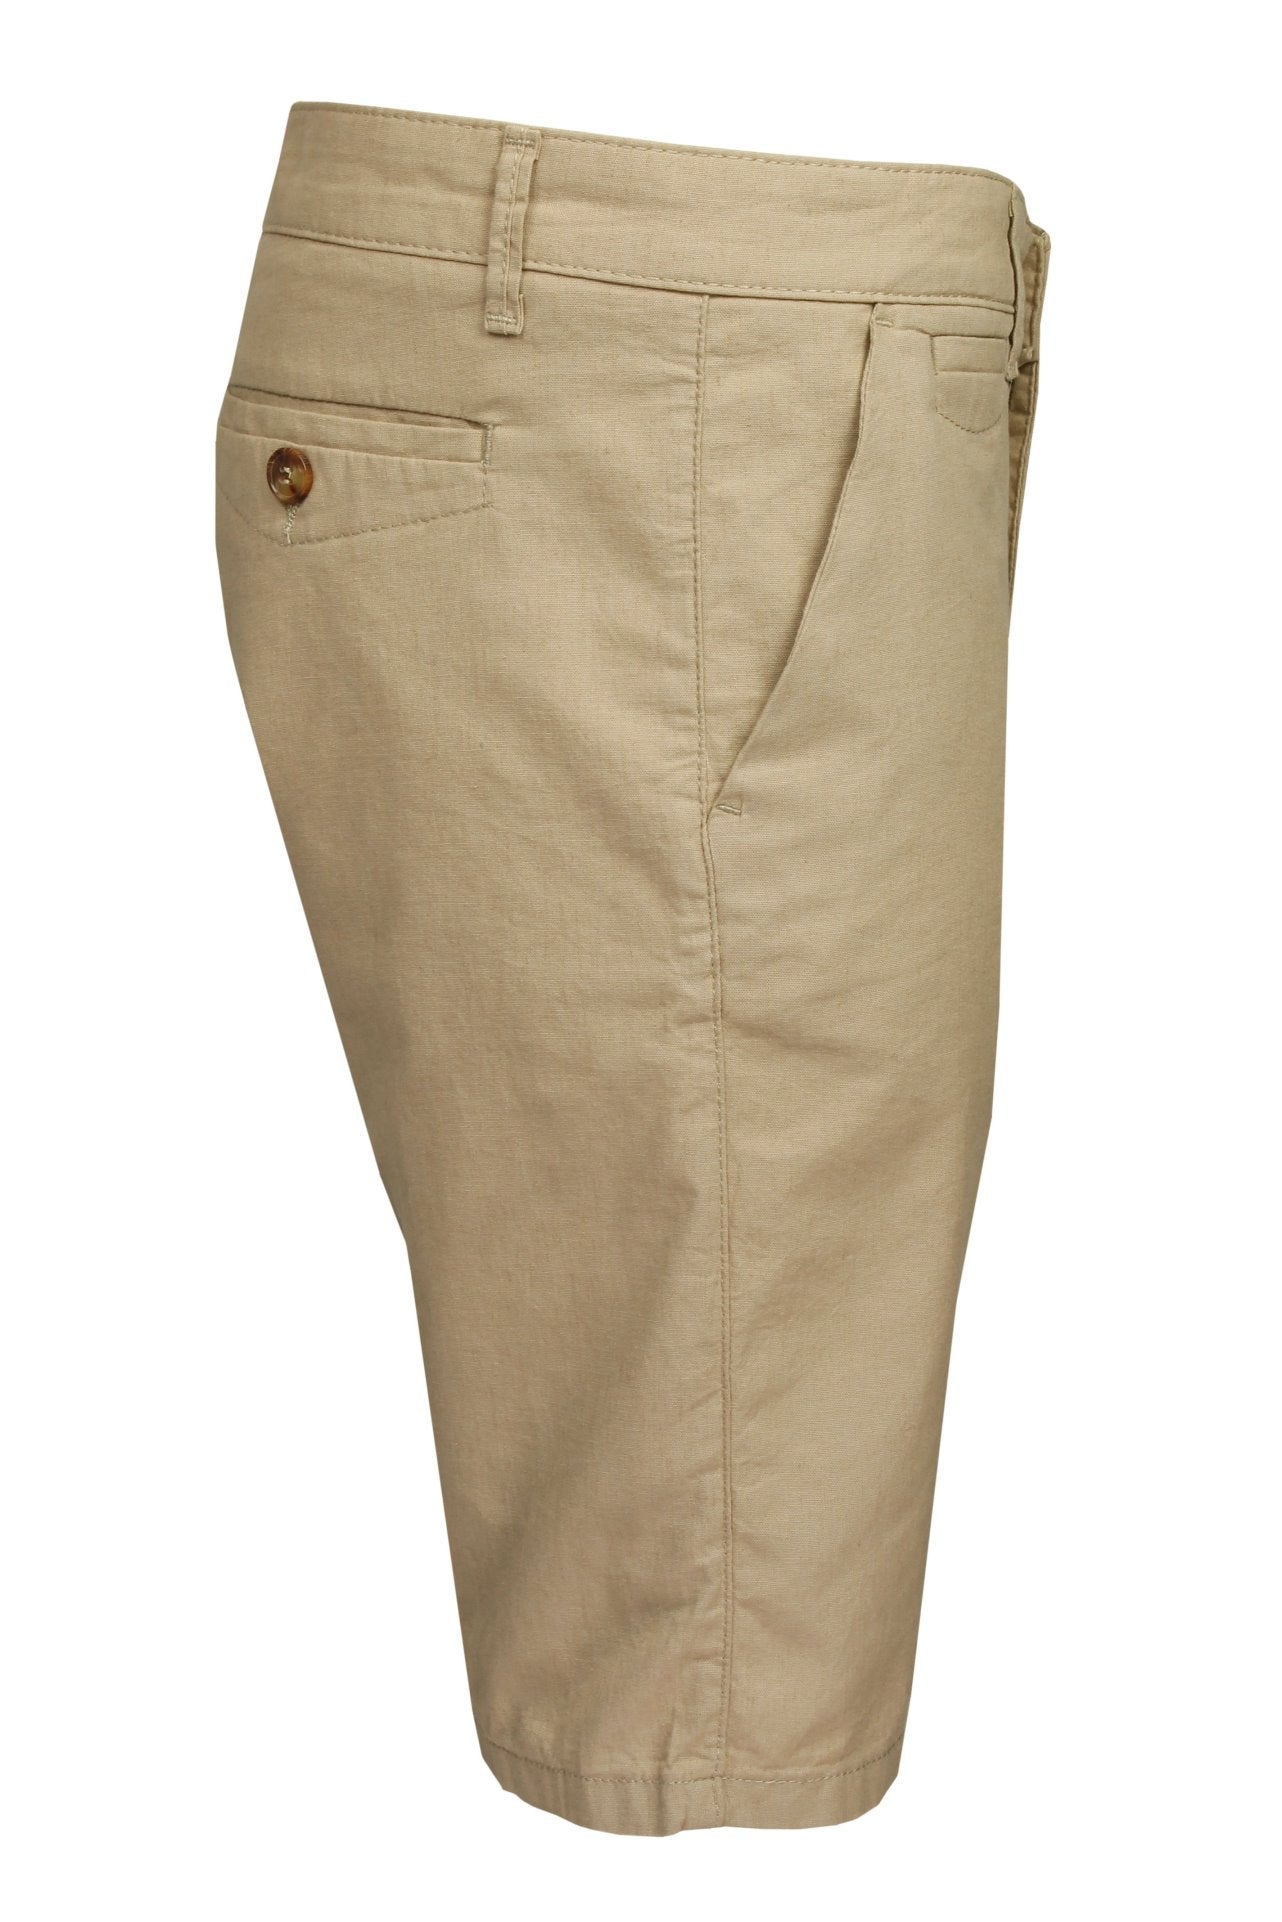 Xact Premium Mens Linen Blend Chino Short-2